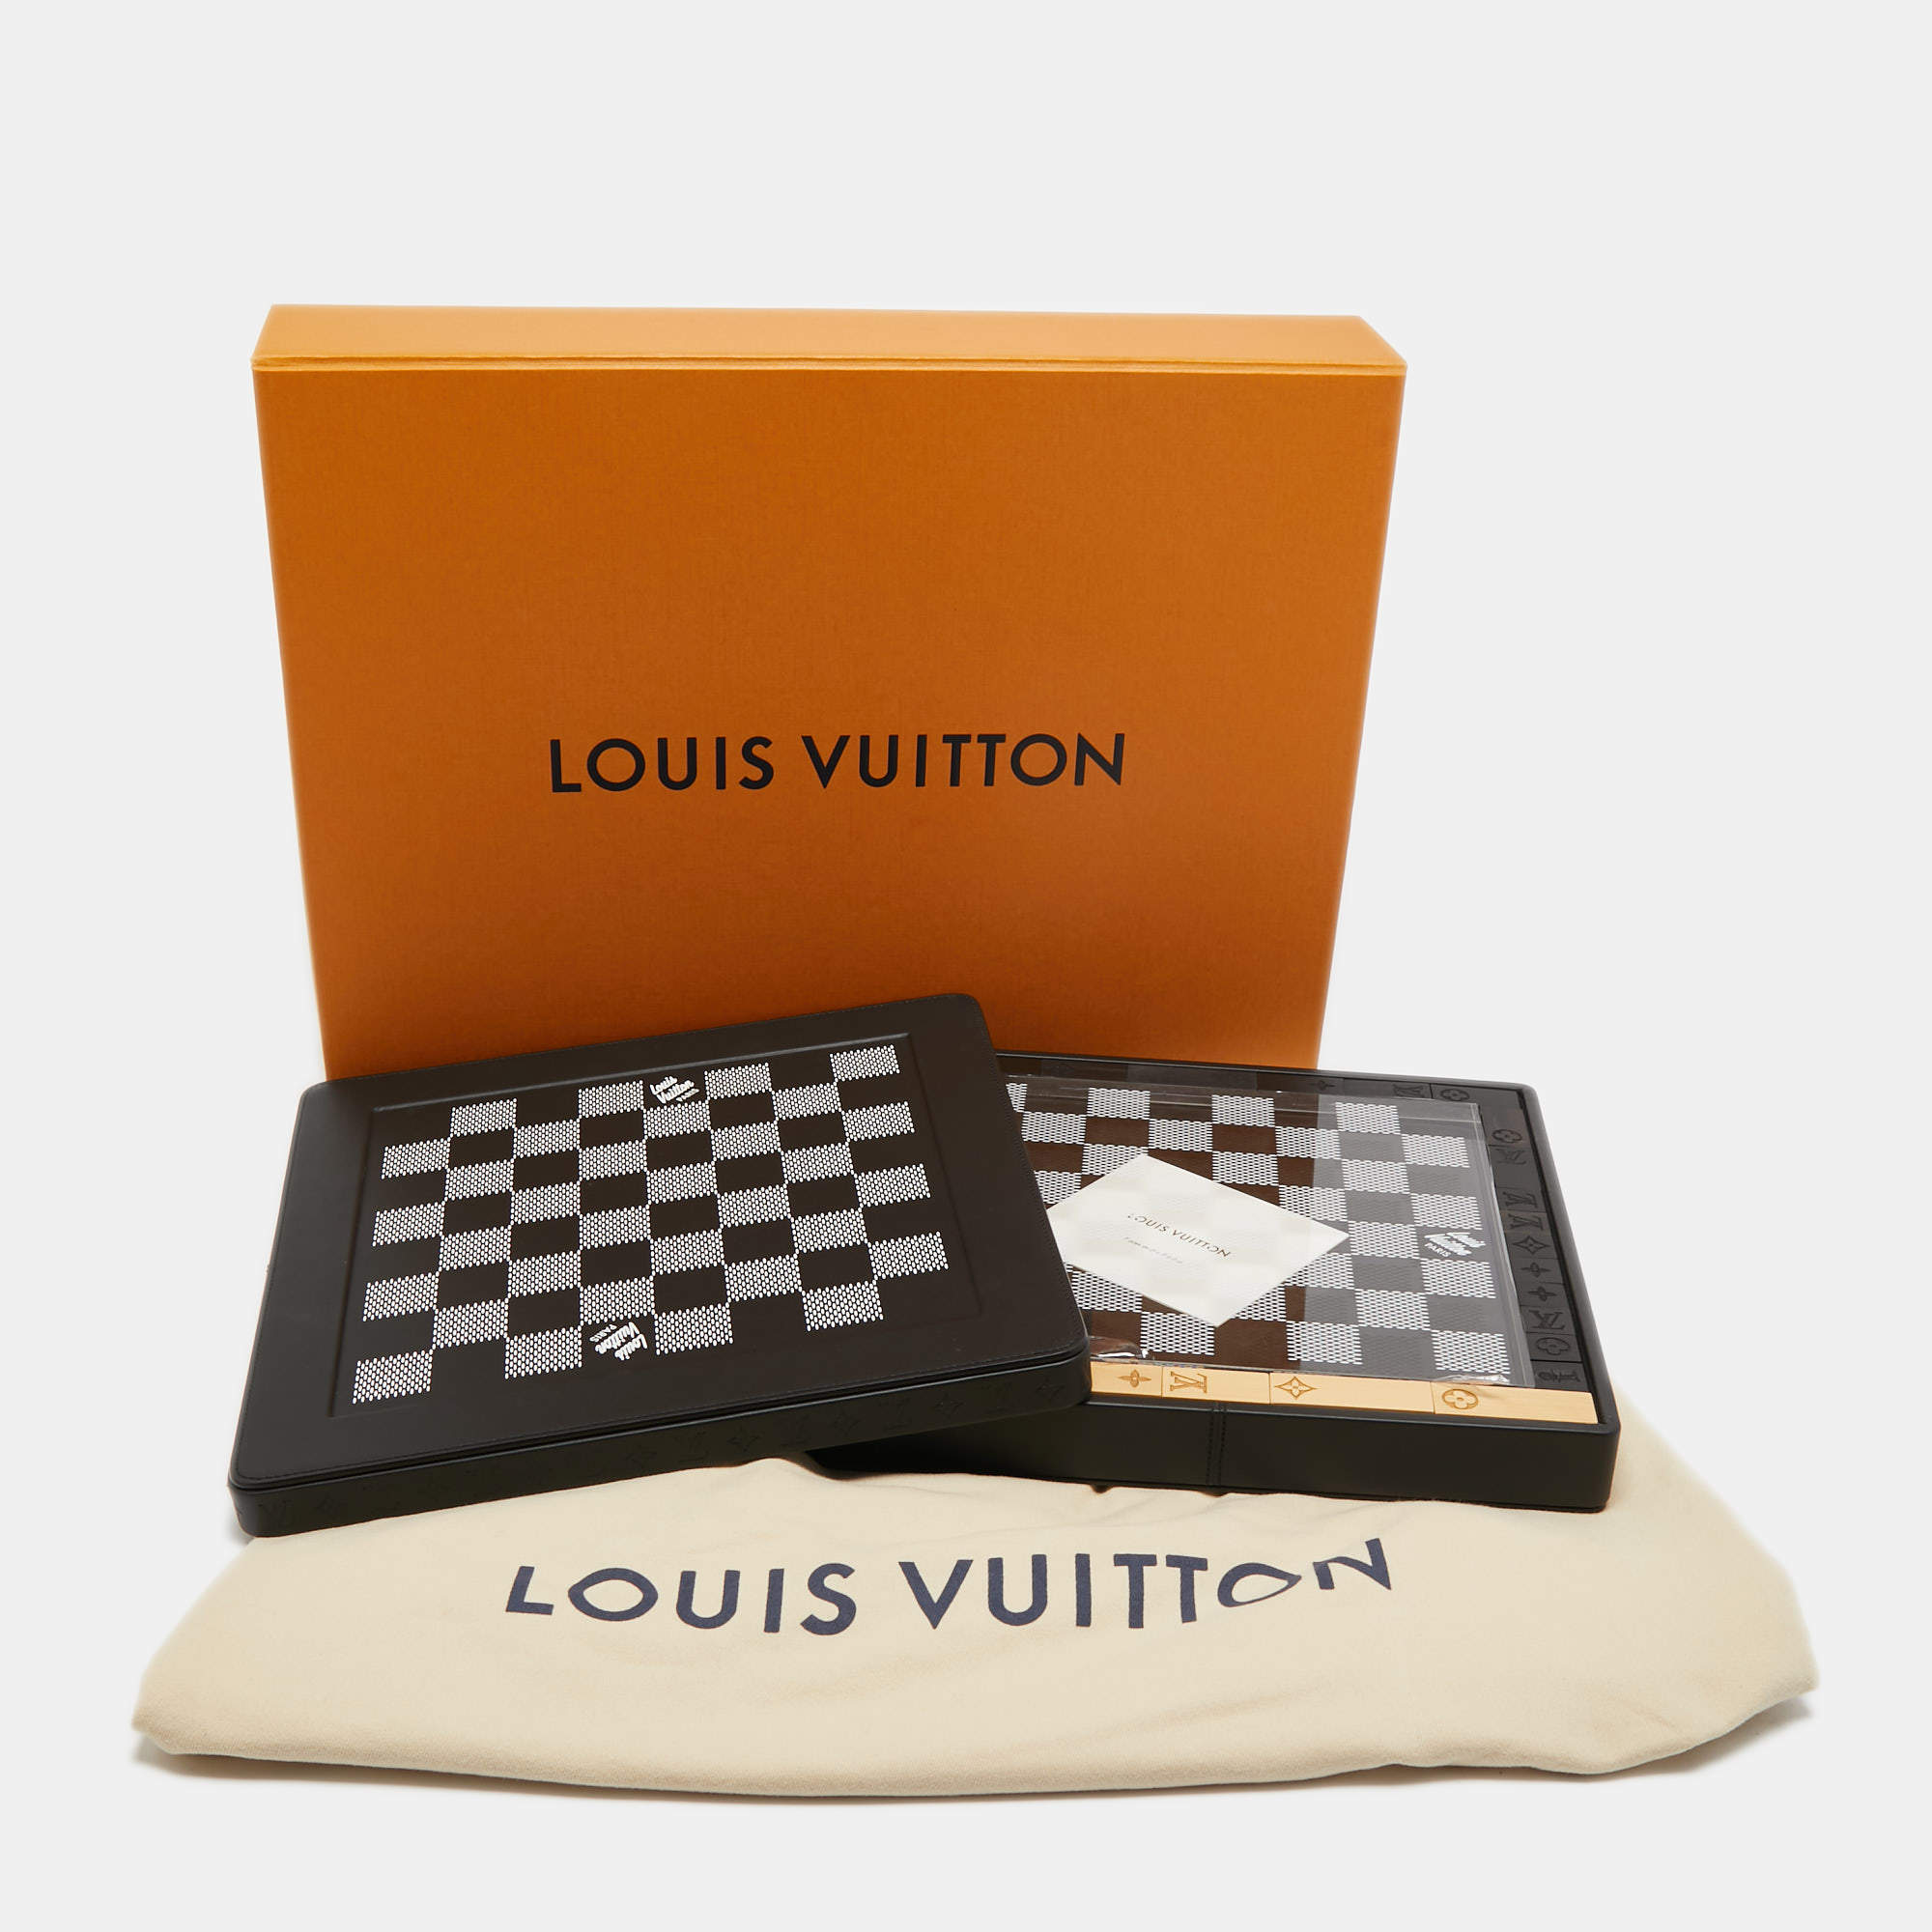 louisvuitton Chess Set in a Monogram Case at the Wynn Las Vegas #shorts # louisvuitton #lasvegas 